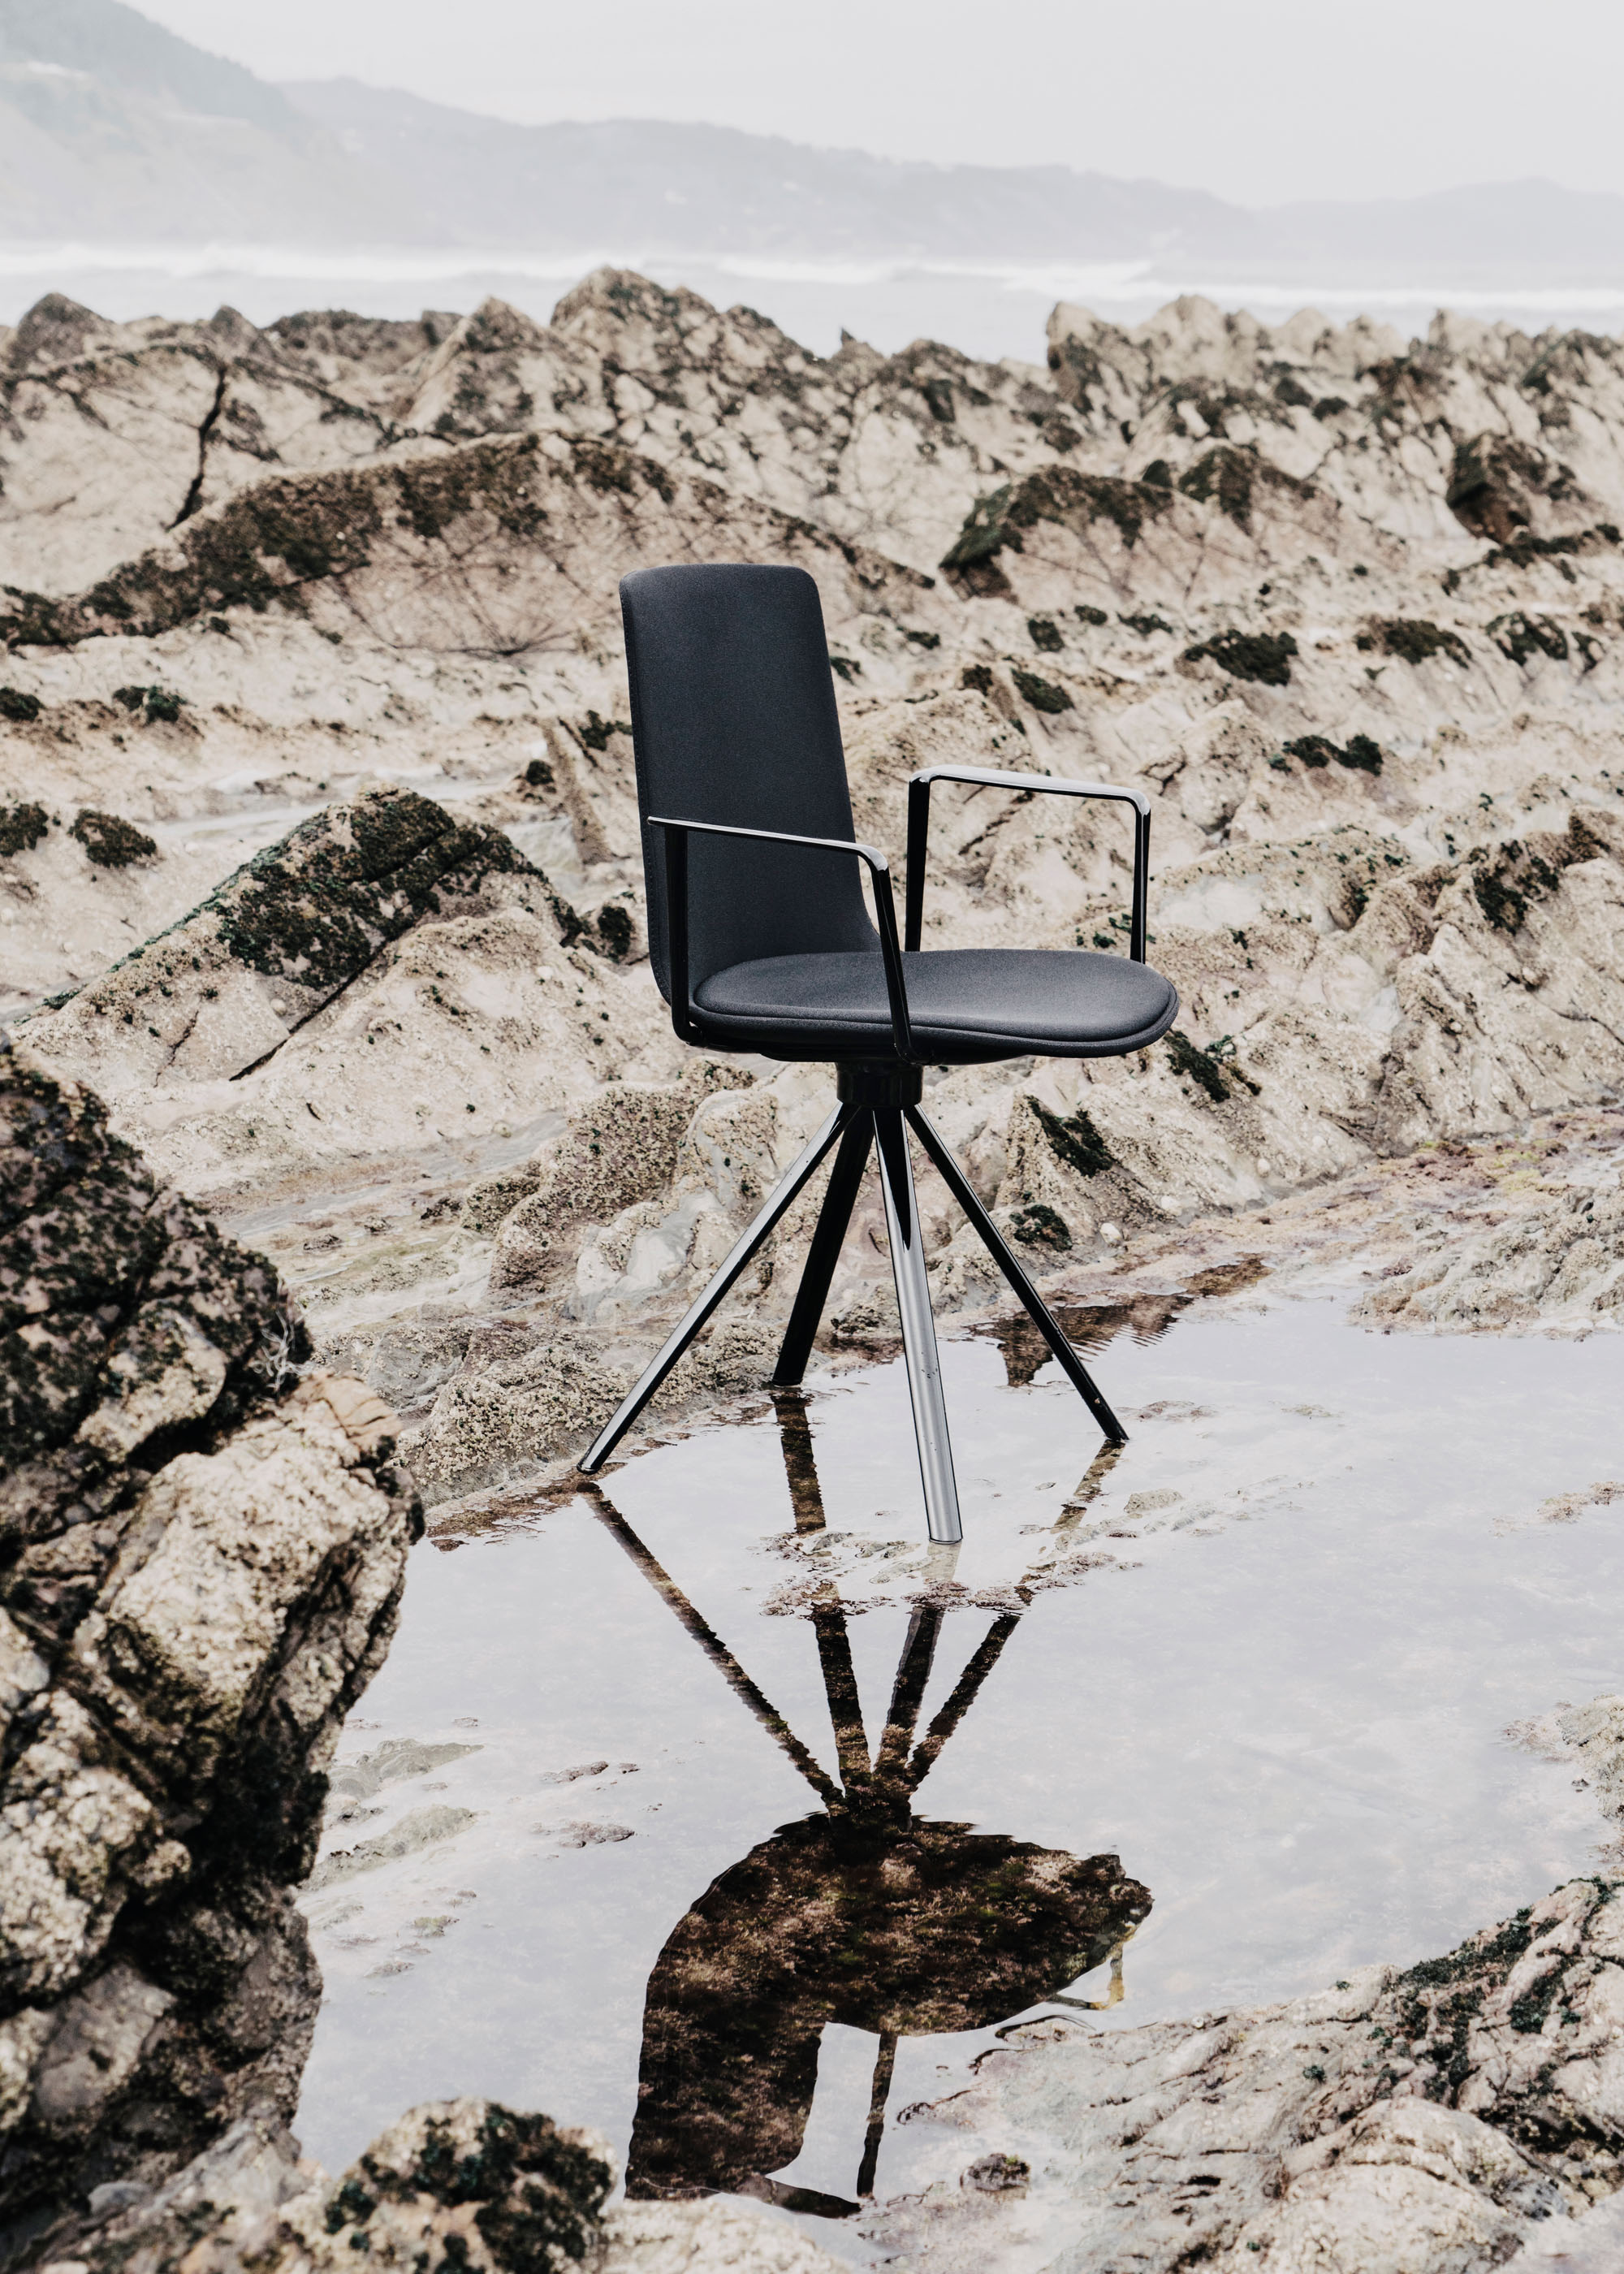 #furniture #enea #design #clase #chairs #basque #flitz #zumaia